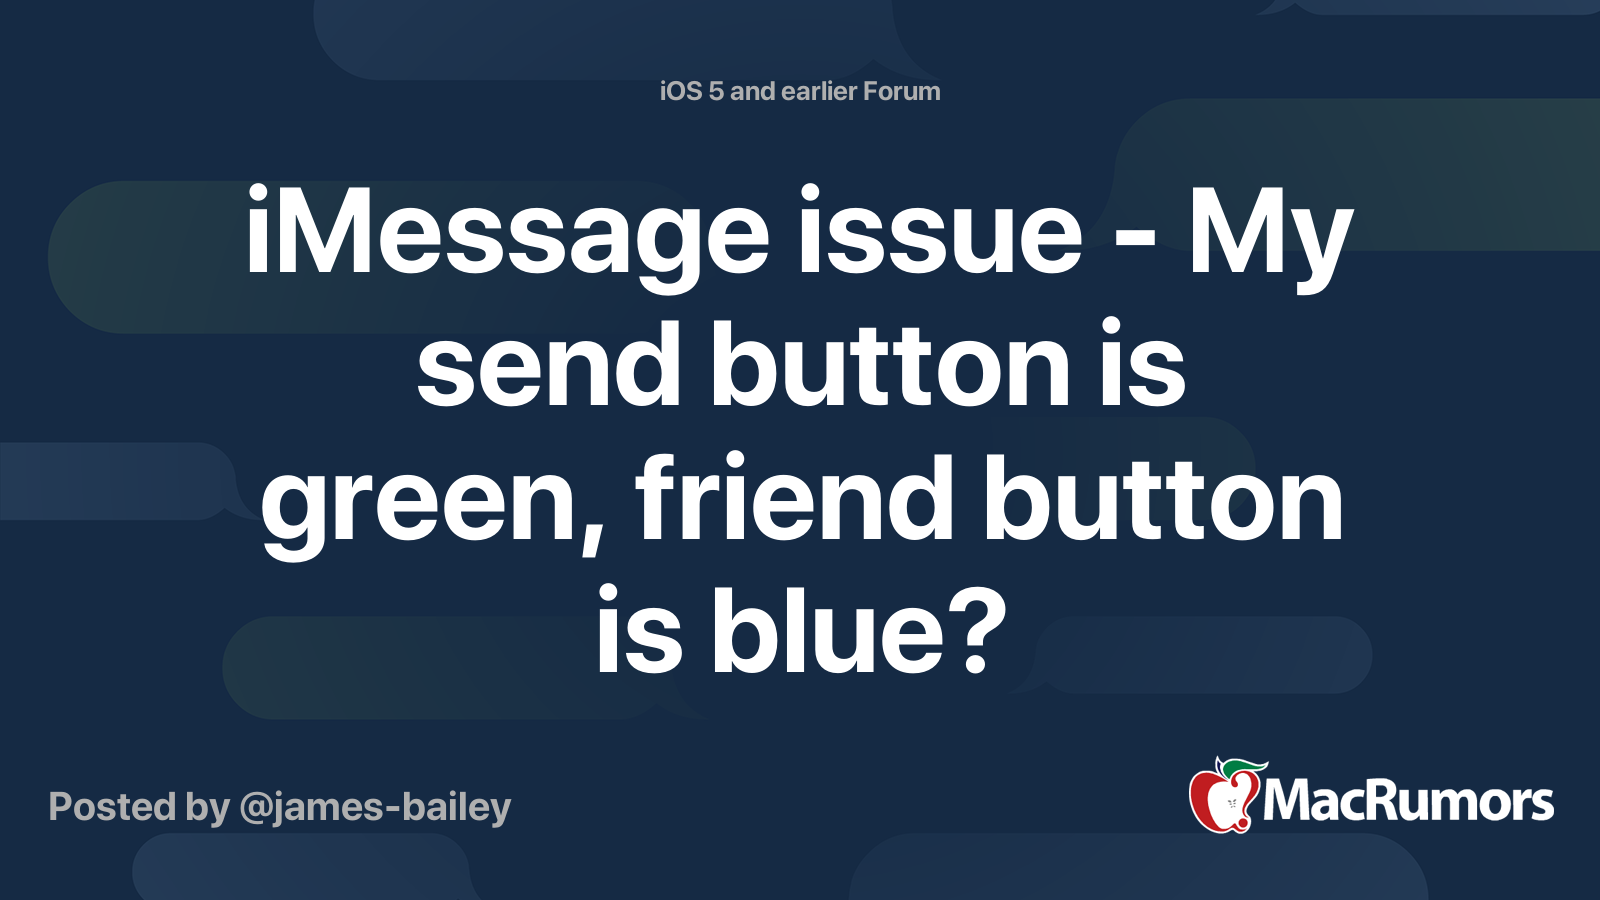 send button in blue